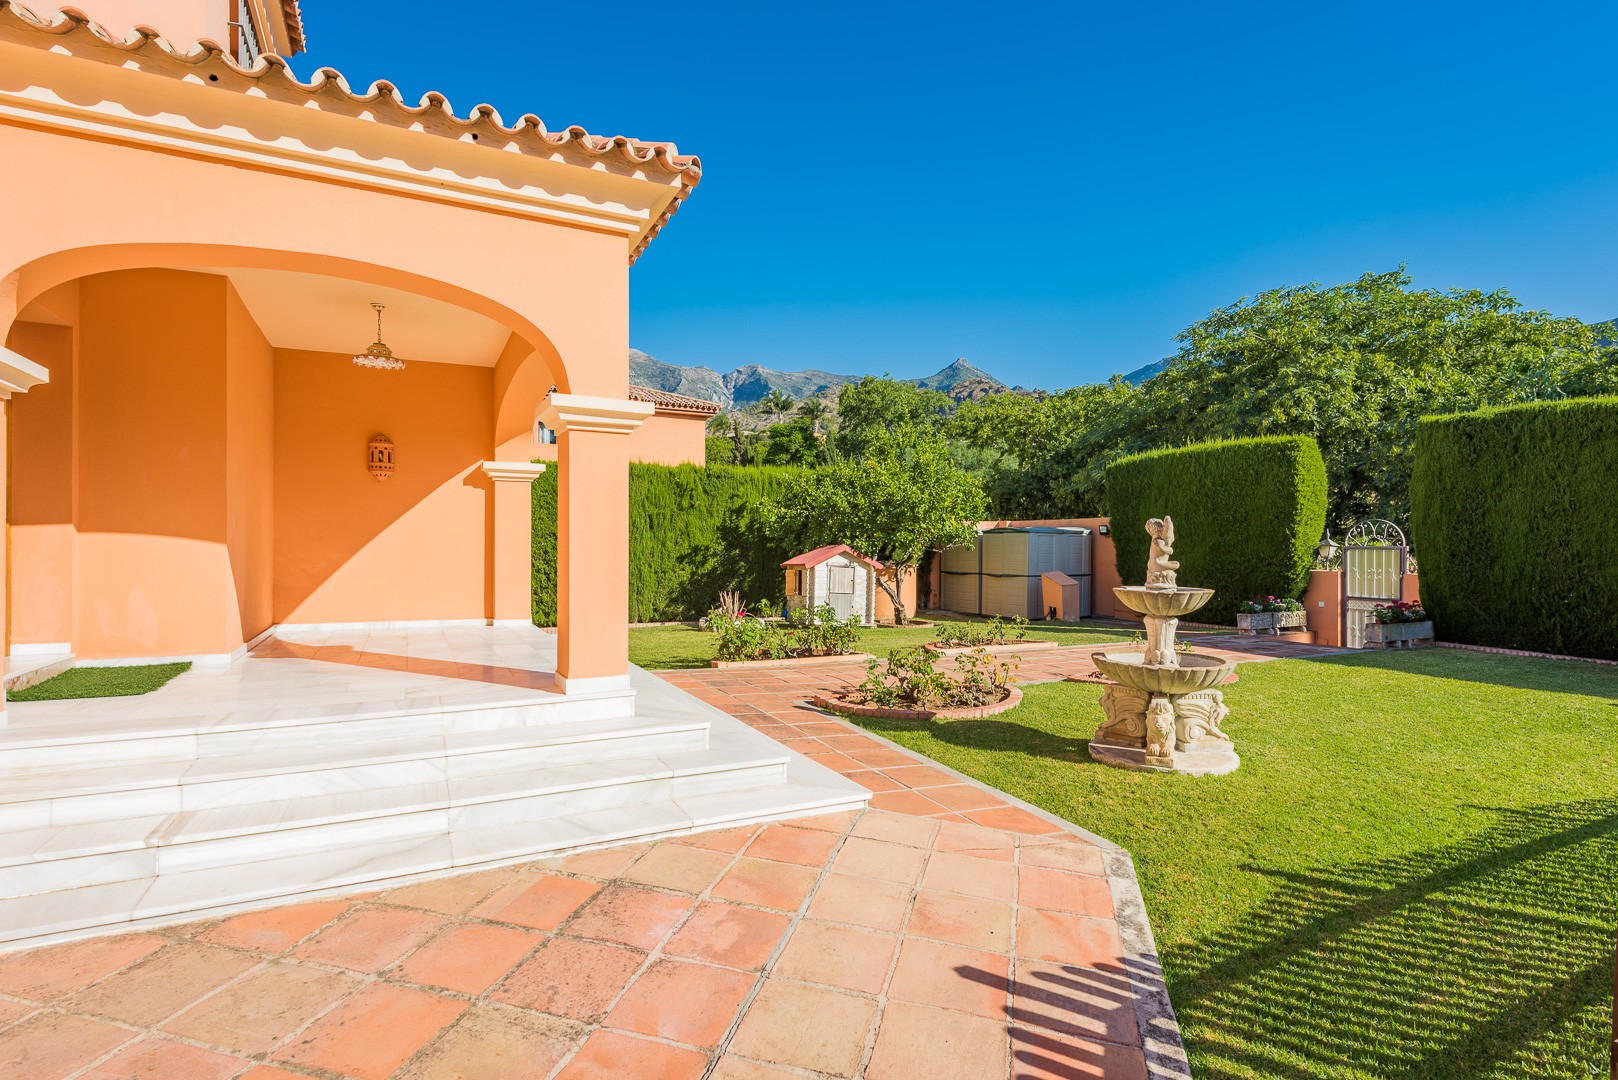 Villa in Huerta del Prado Marbella for sale